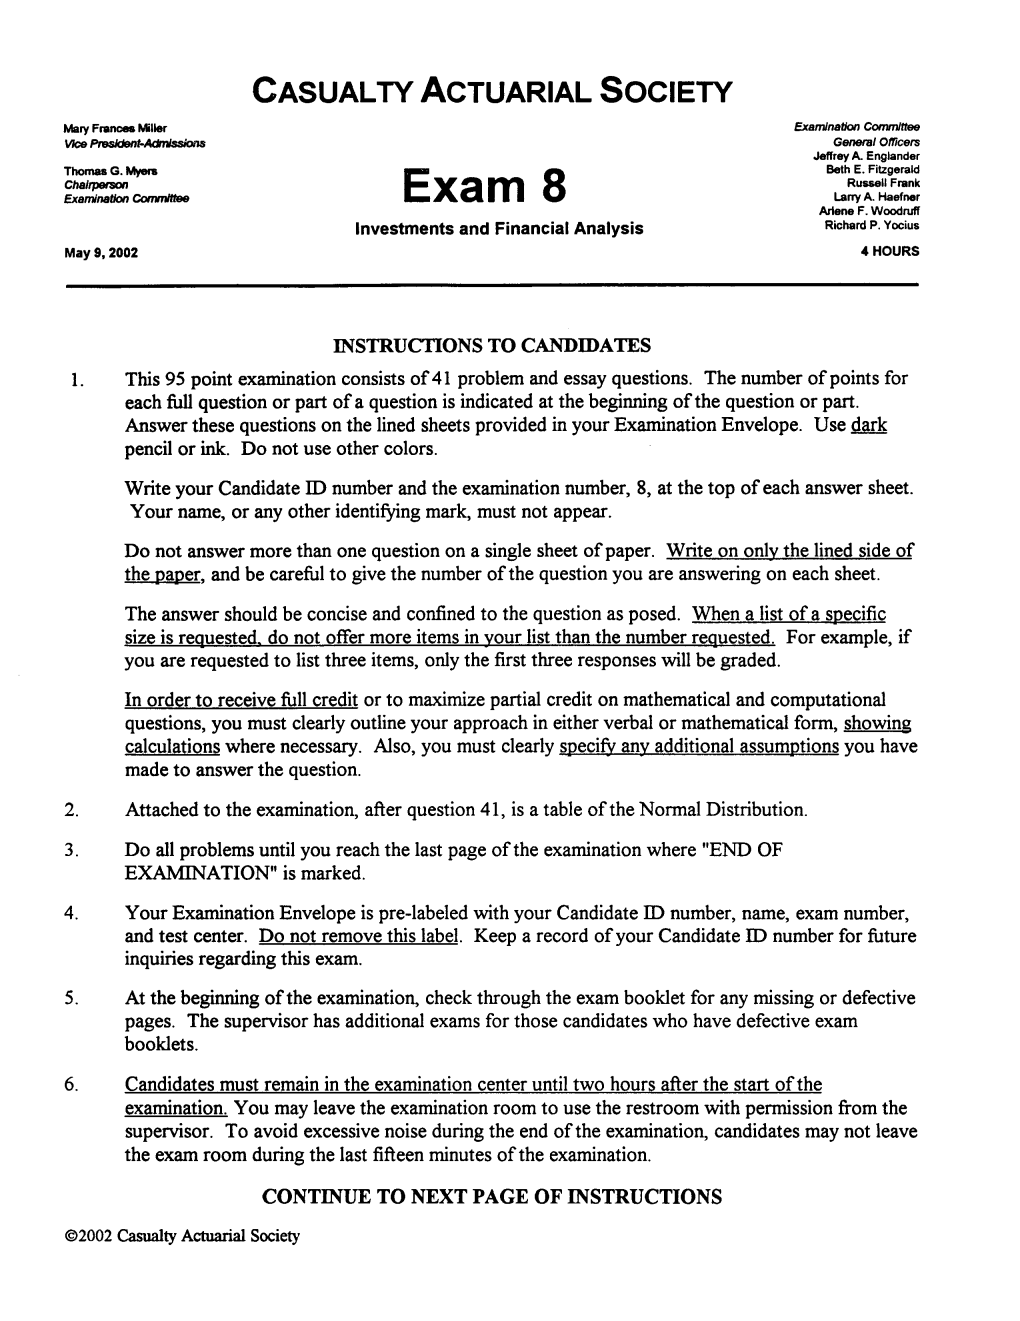 Casualty Actuarial Society Course 8 Examination, Spring 2002